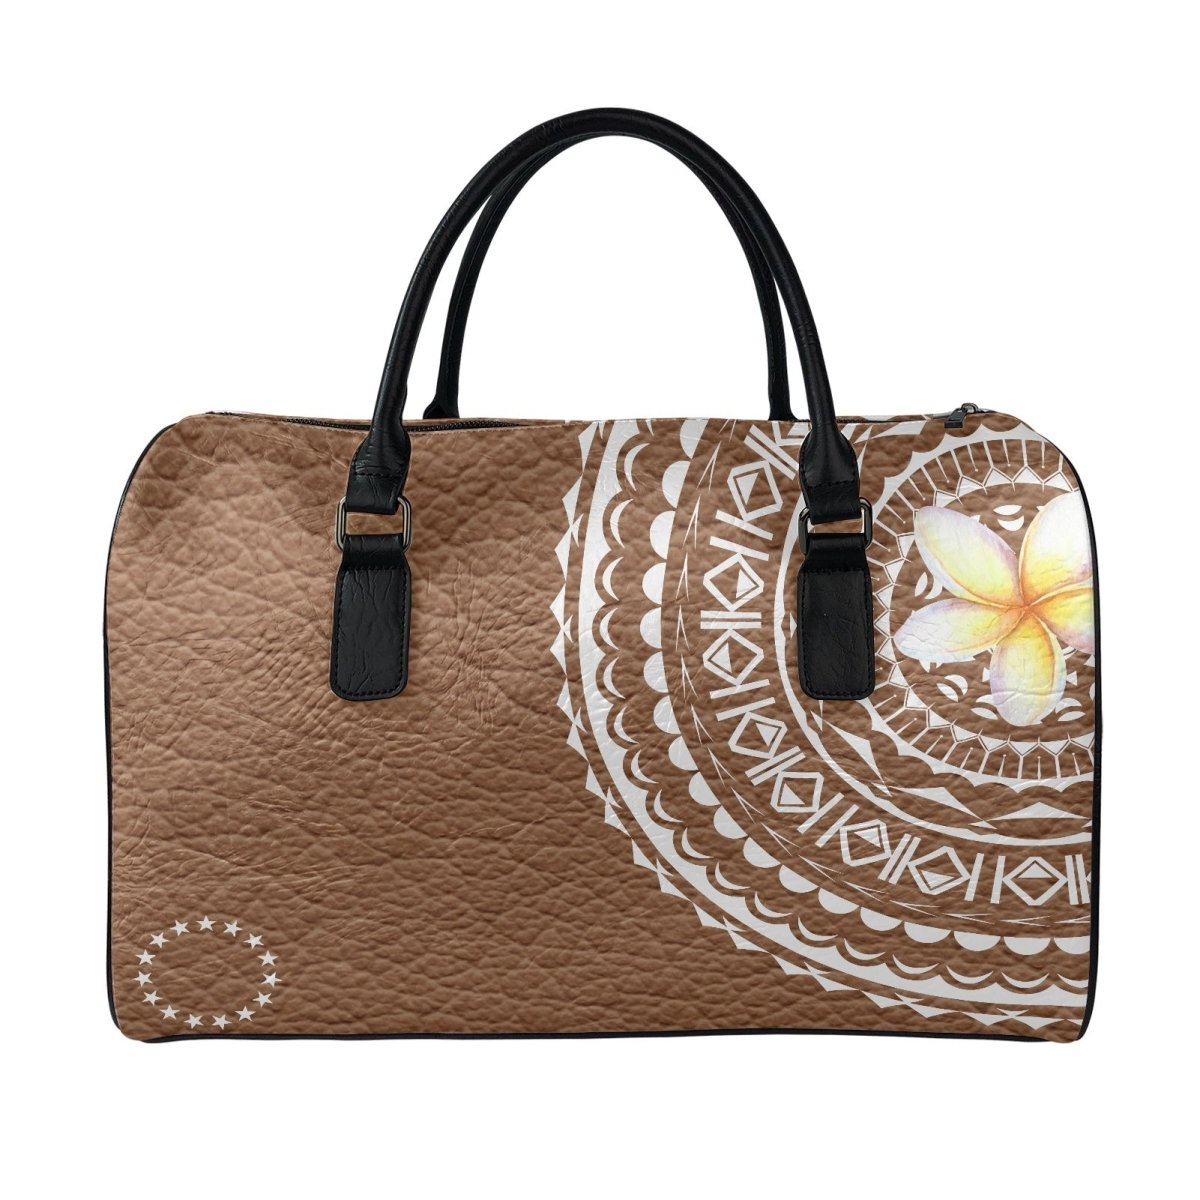 Cook Islands travel bag - Nesian Kulture